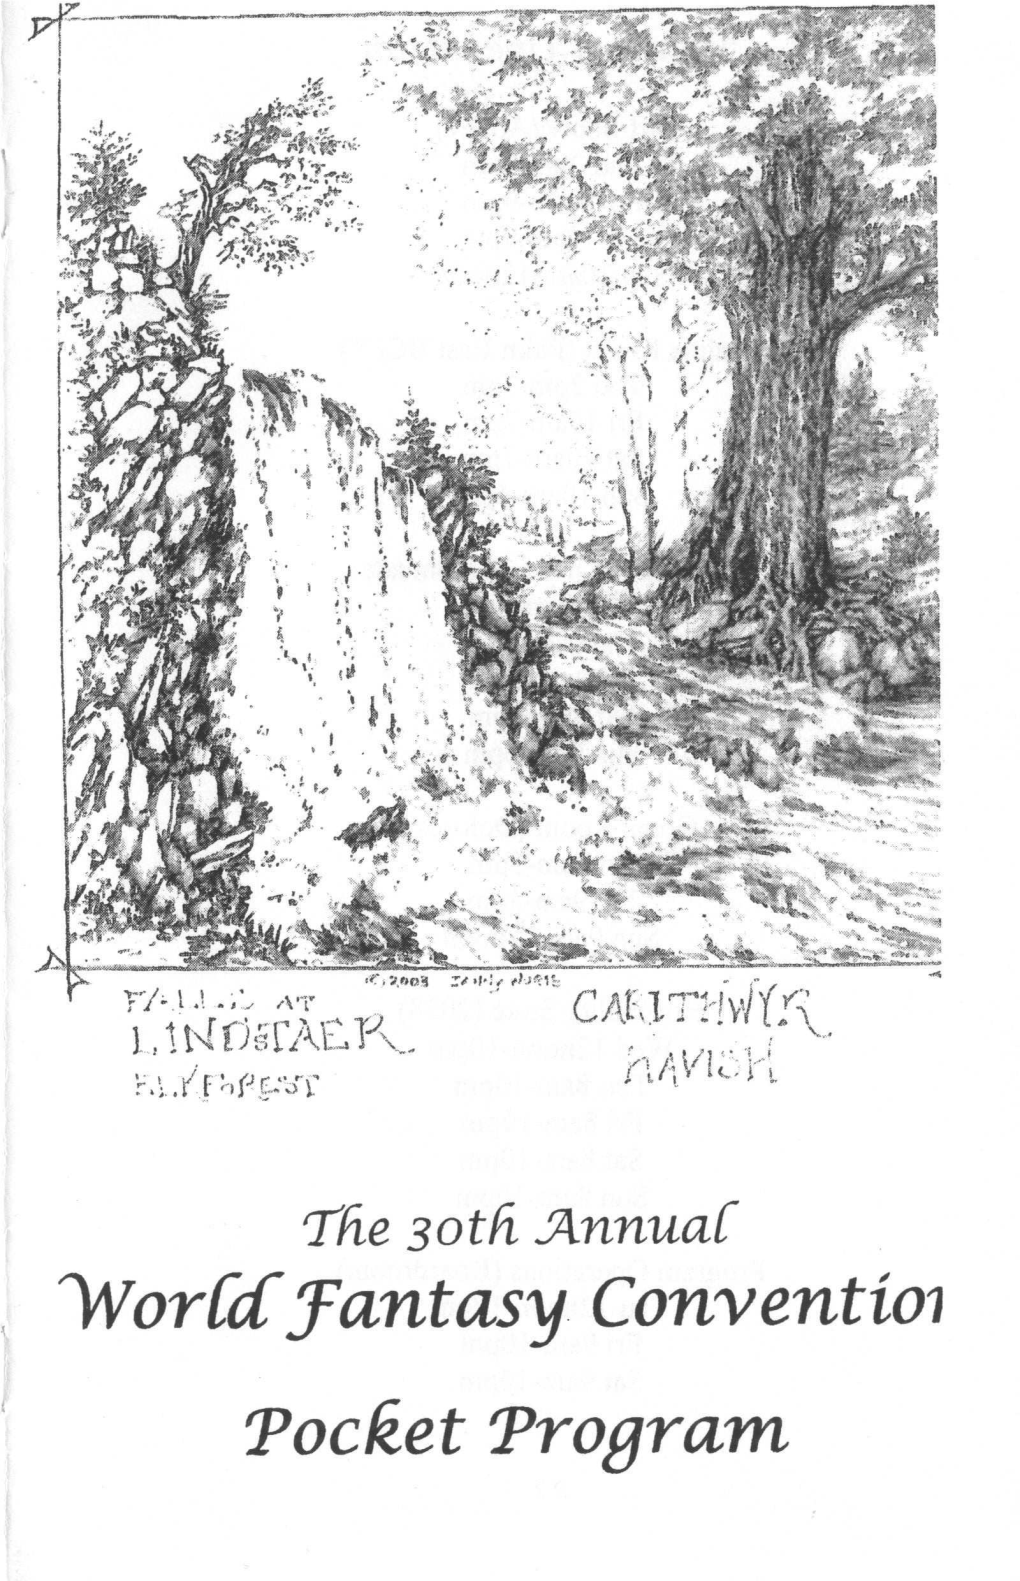 World Fantasy Convention 2004 Pocket Program